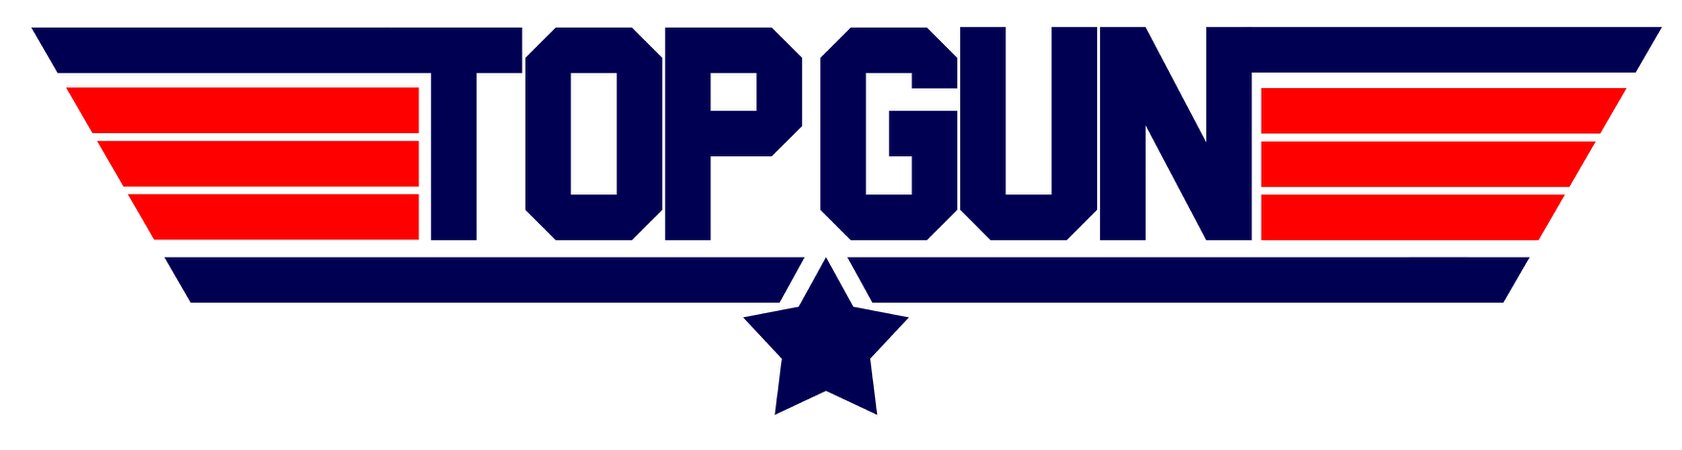 top gun logo - Google Search